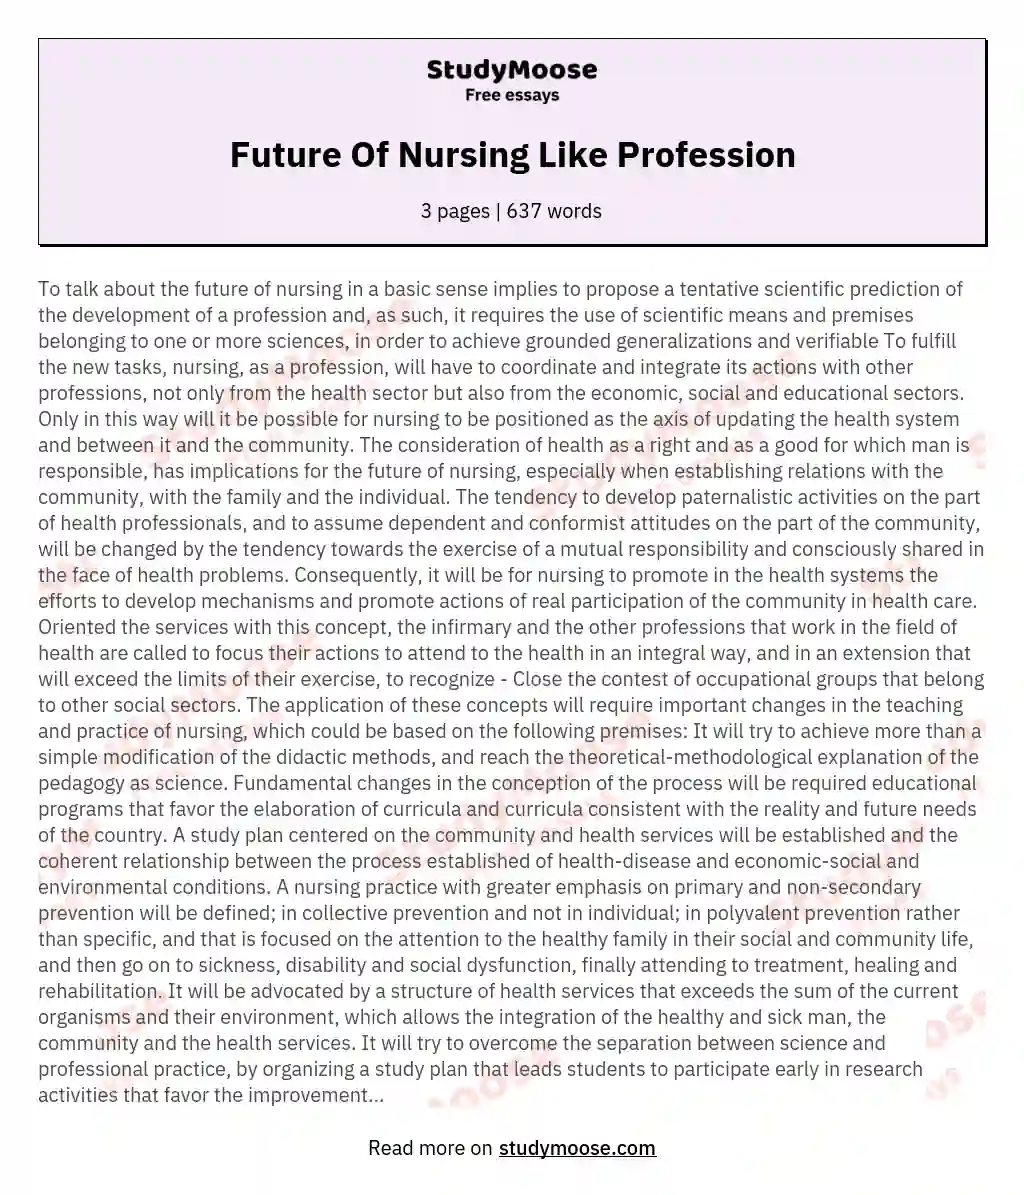 Future Of Nursing Like Profession